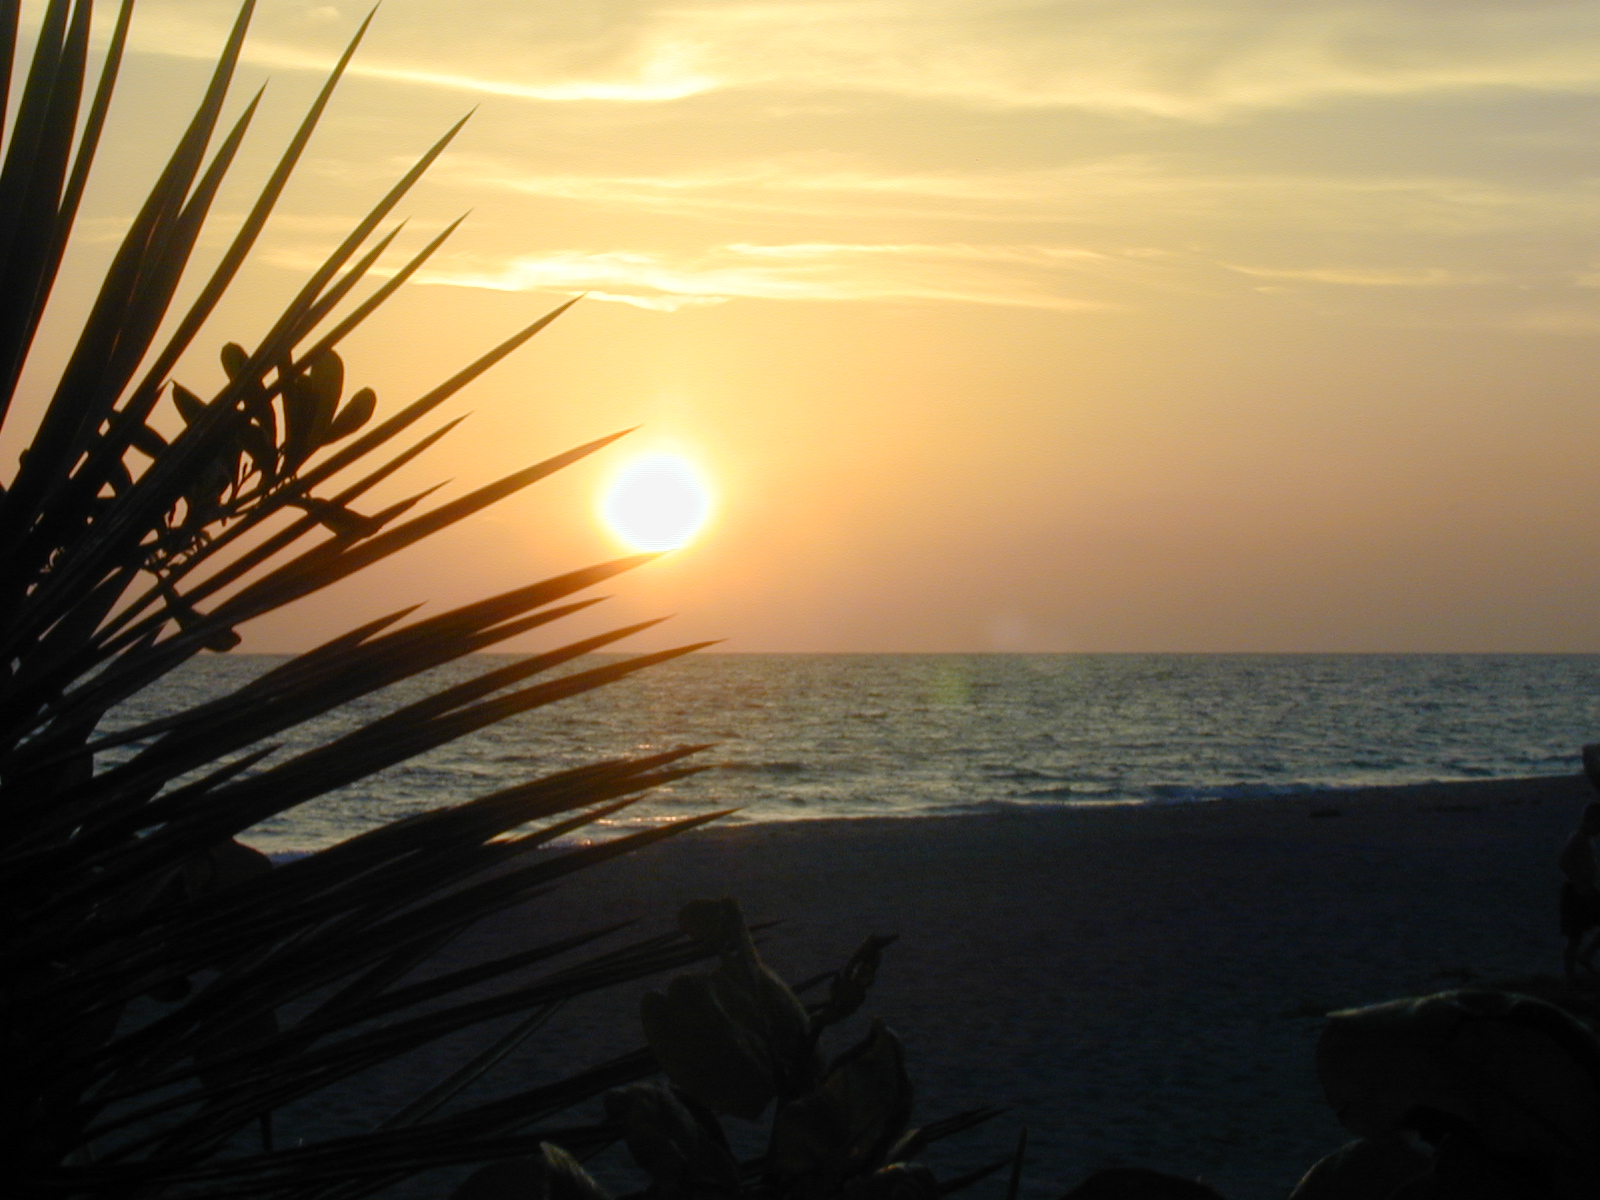 Longboat Arms beach sunset